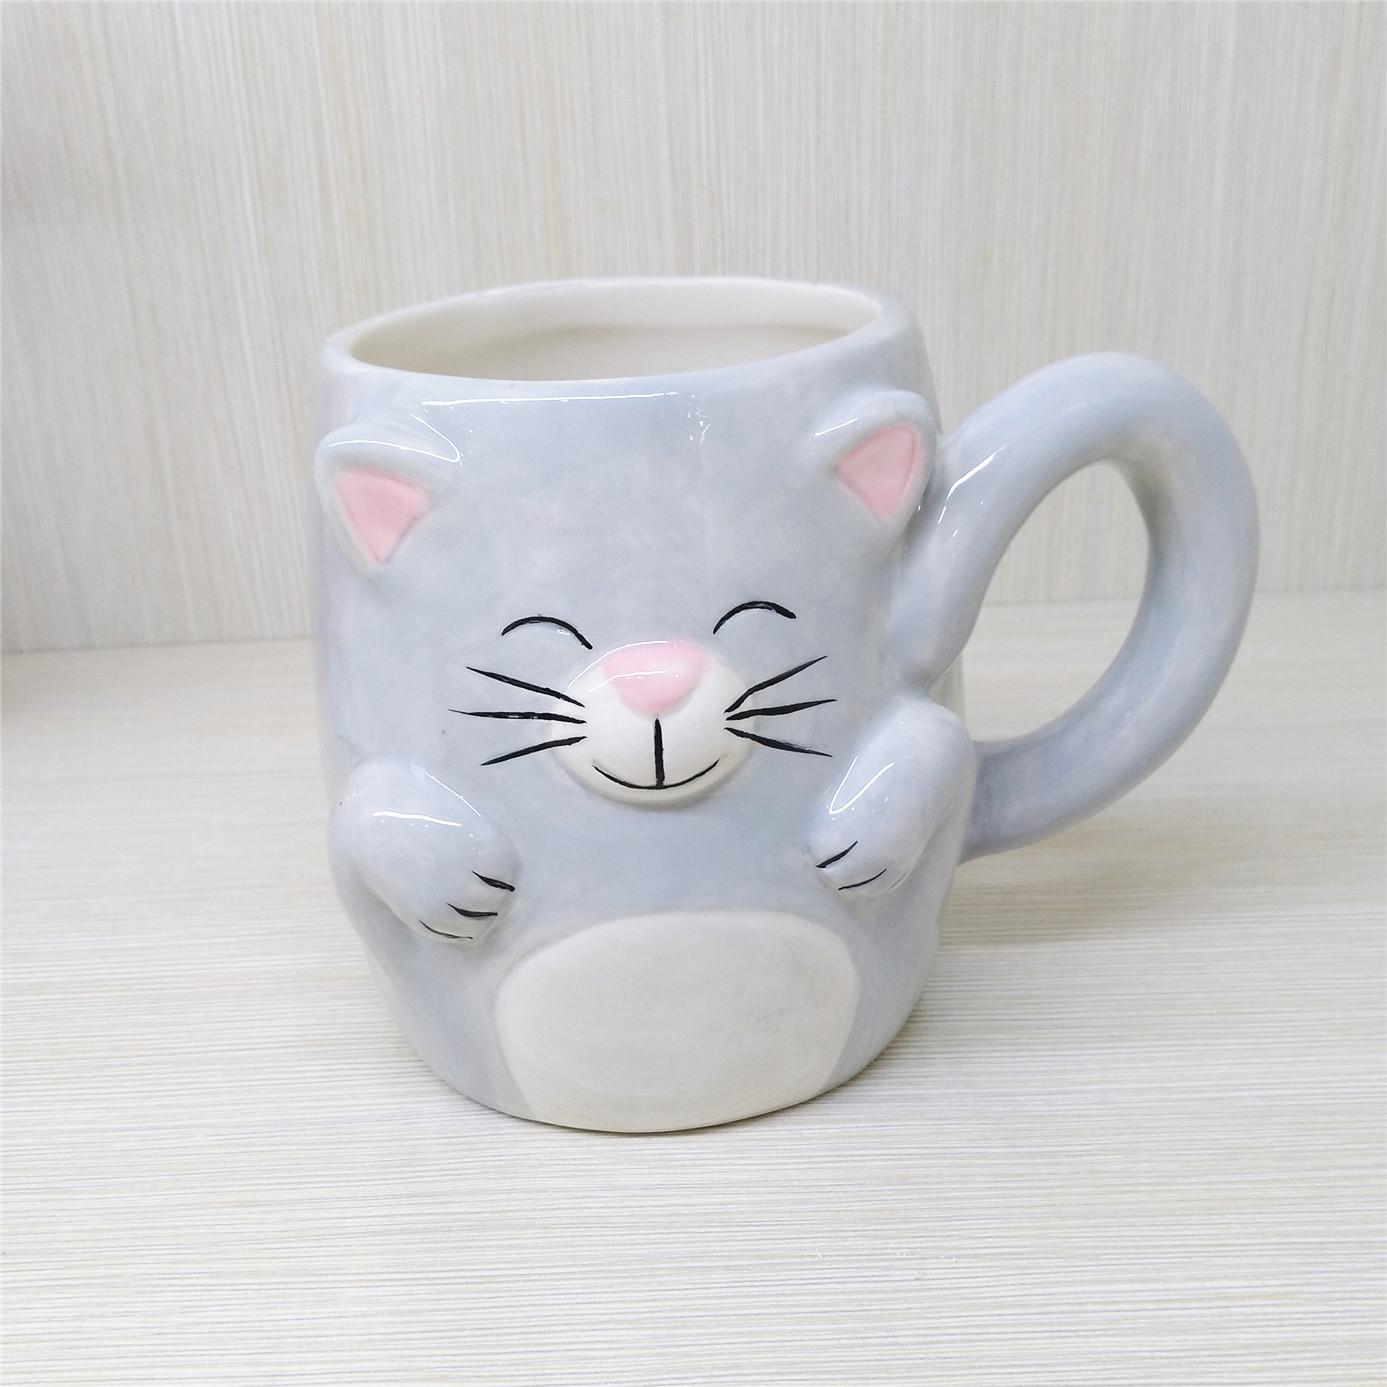 Manufacture embossed cat coffee mugs, kids cute animal gift ceramic mug 12oz